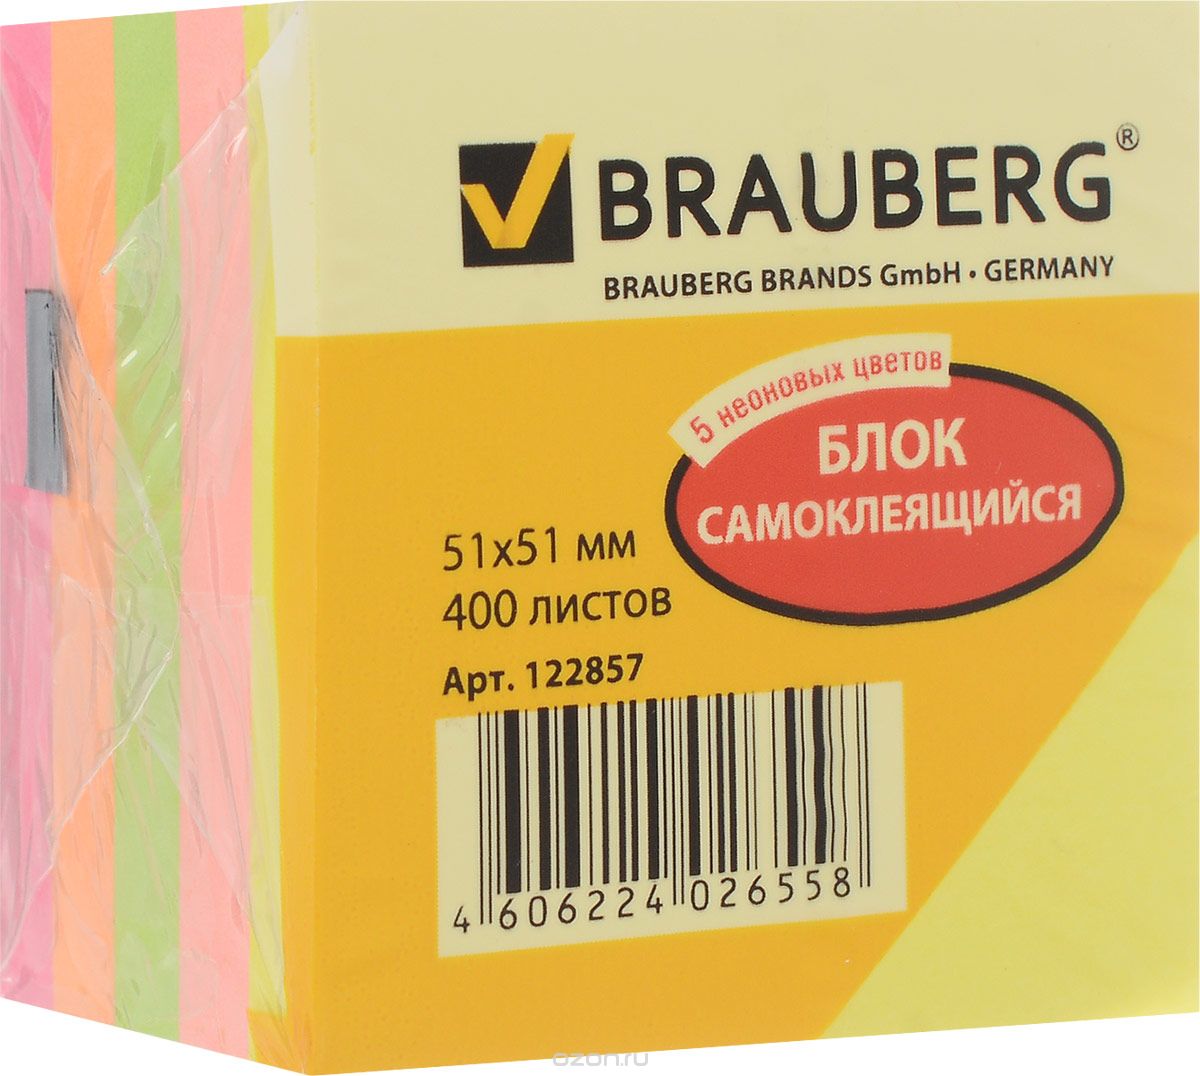 Brauberg       5,1  5,1  400  5  122857